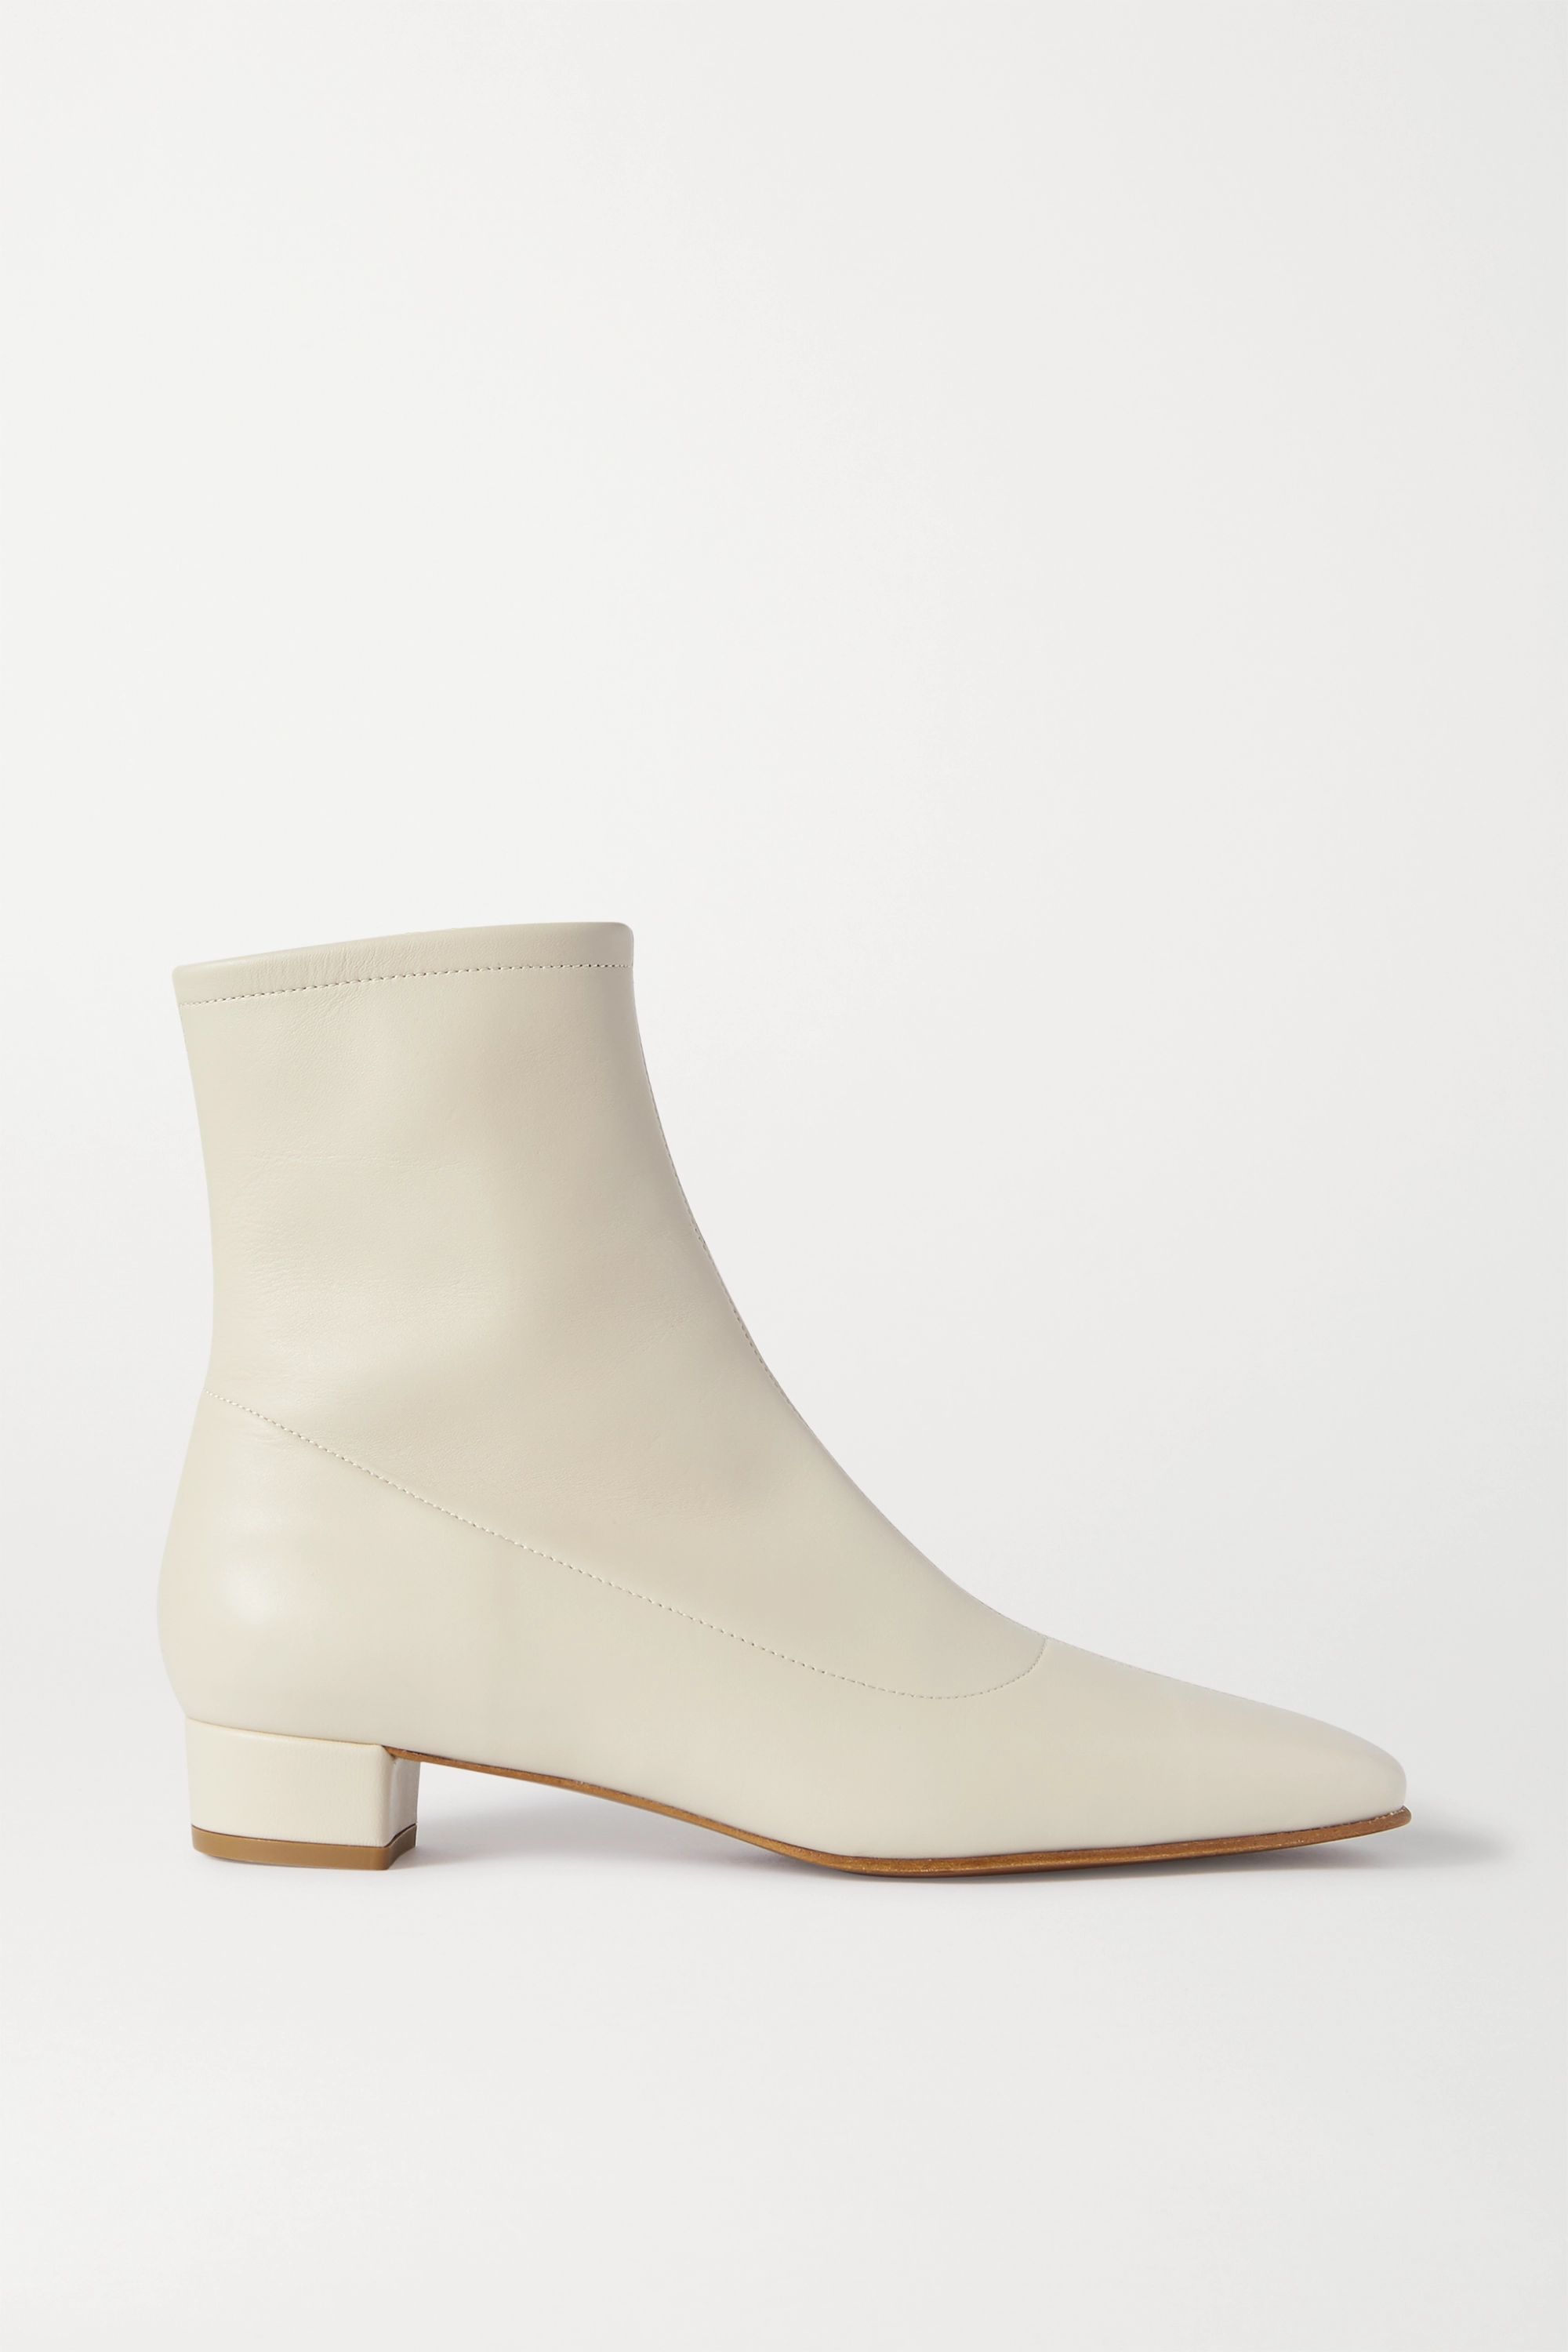 cream white boots